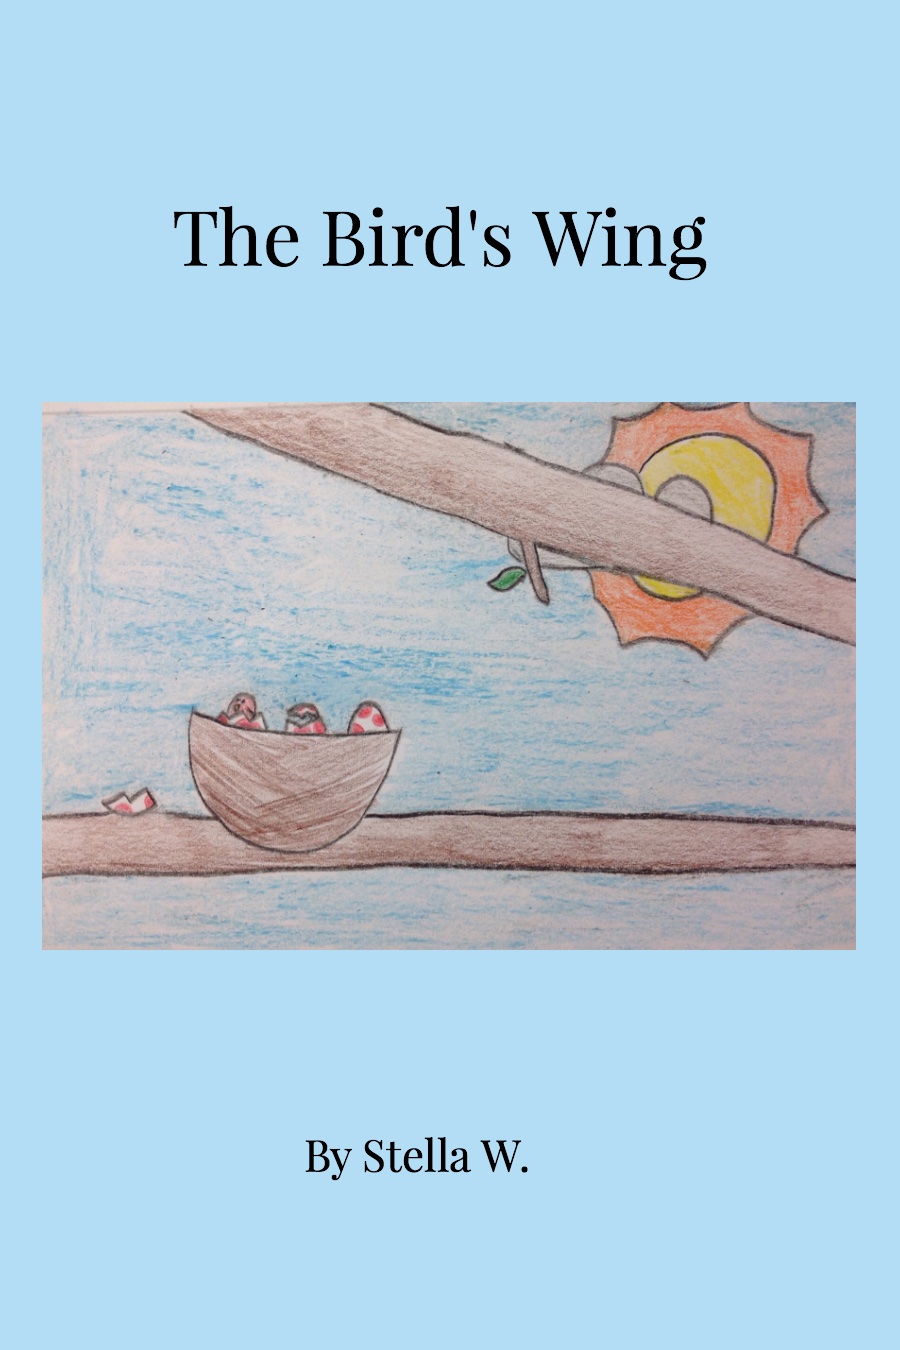 The Bird’s Wing By Stella W